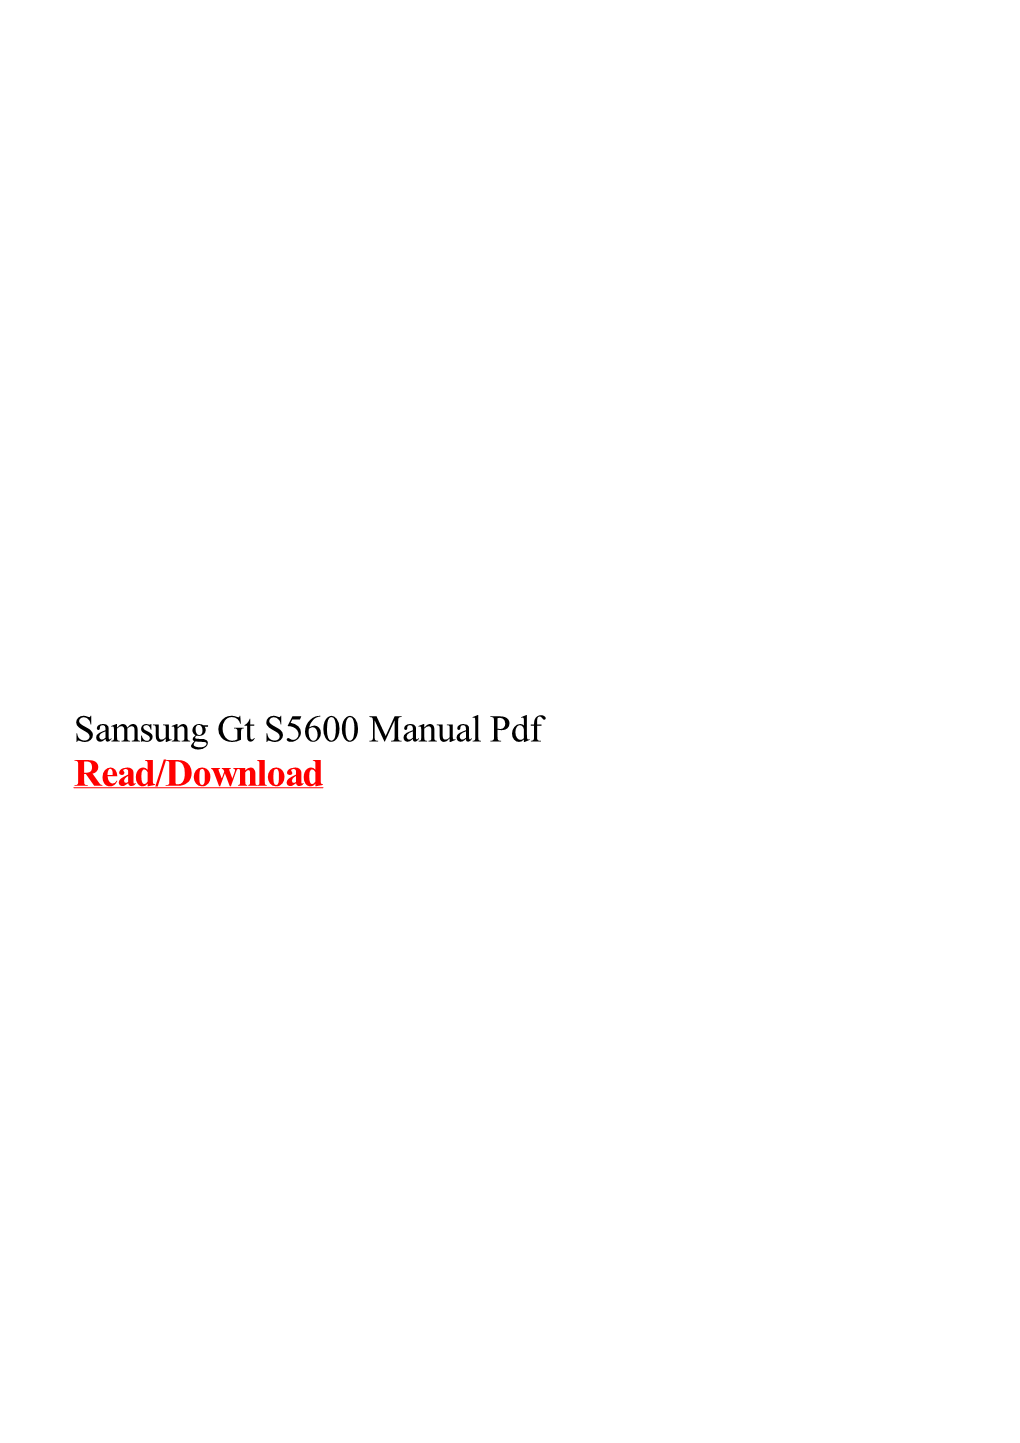 Samsung Gt S5600 Manual Pdf